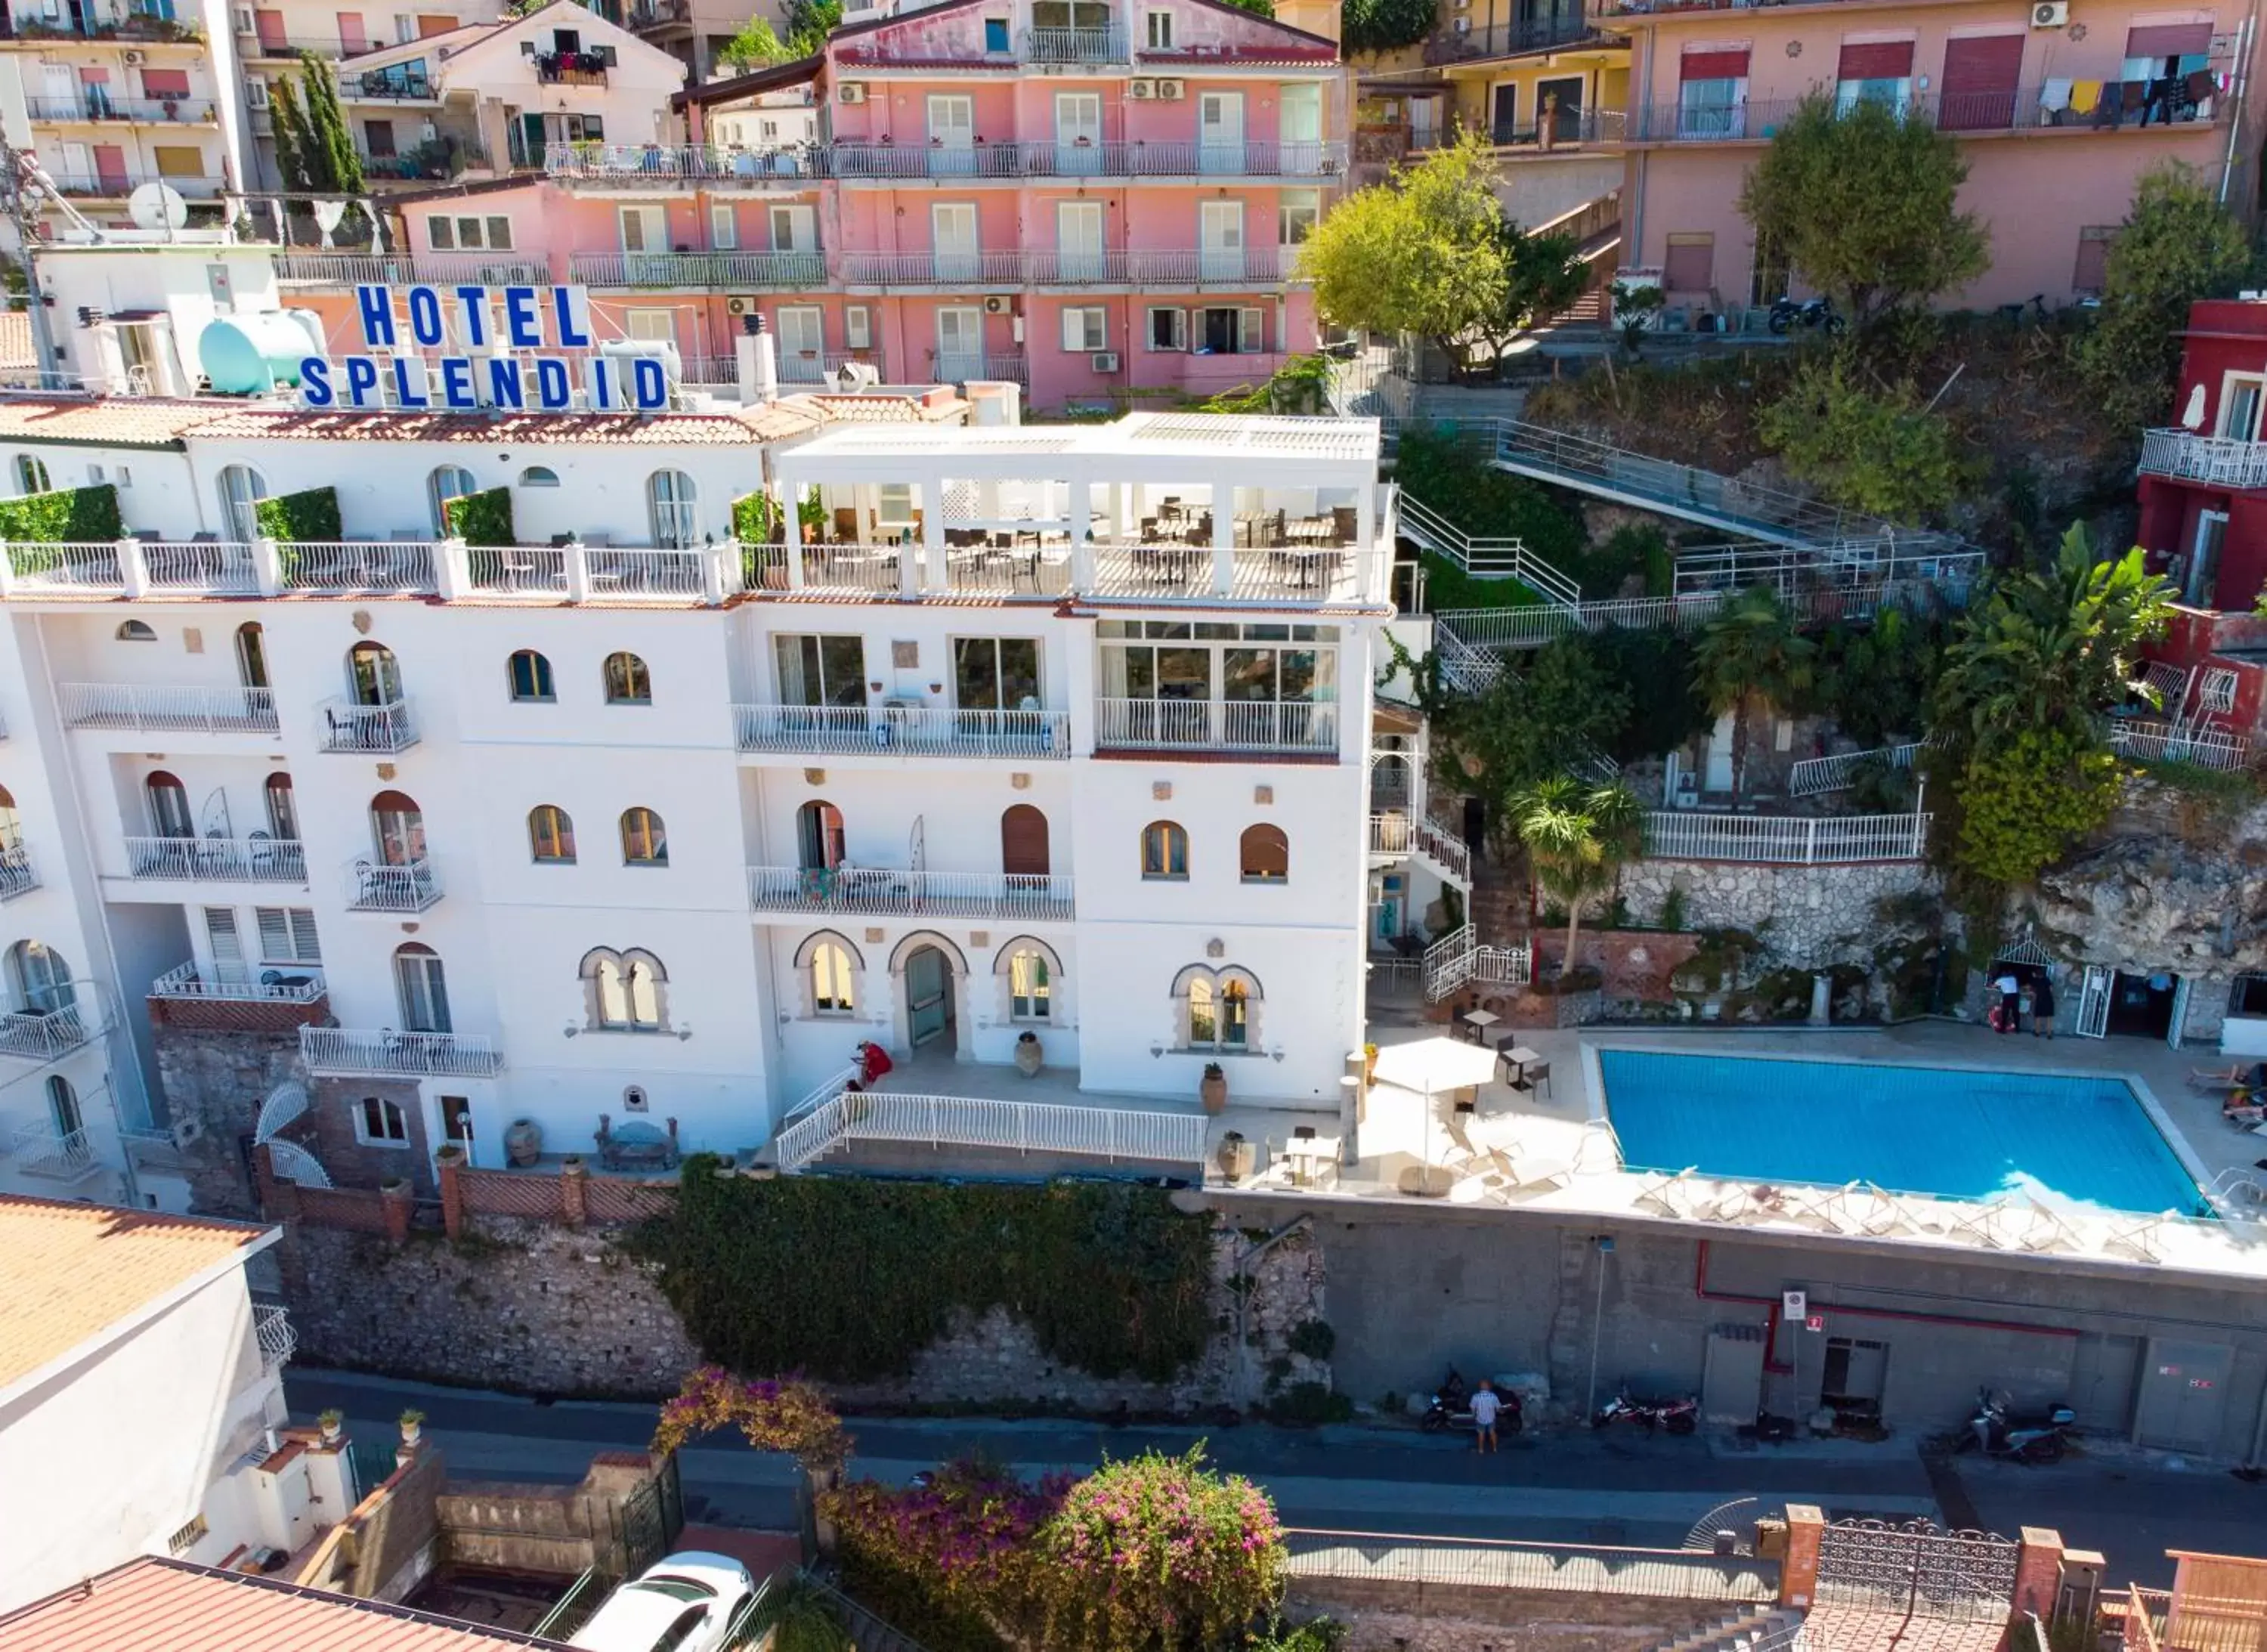 Property building, Swimming Pool in Splendid Hotel Taormina